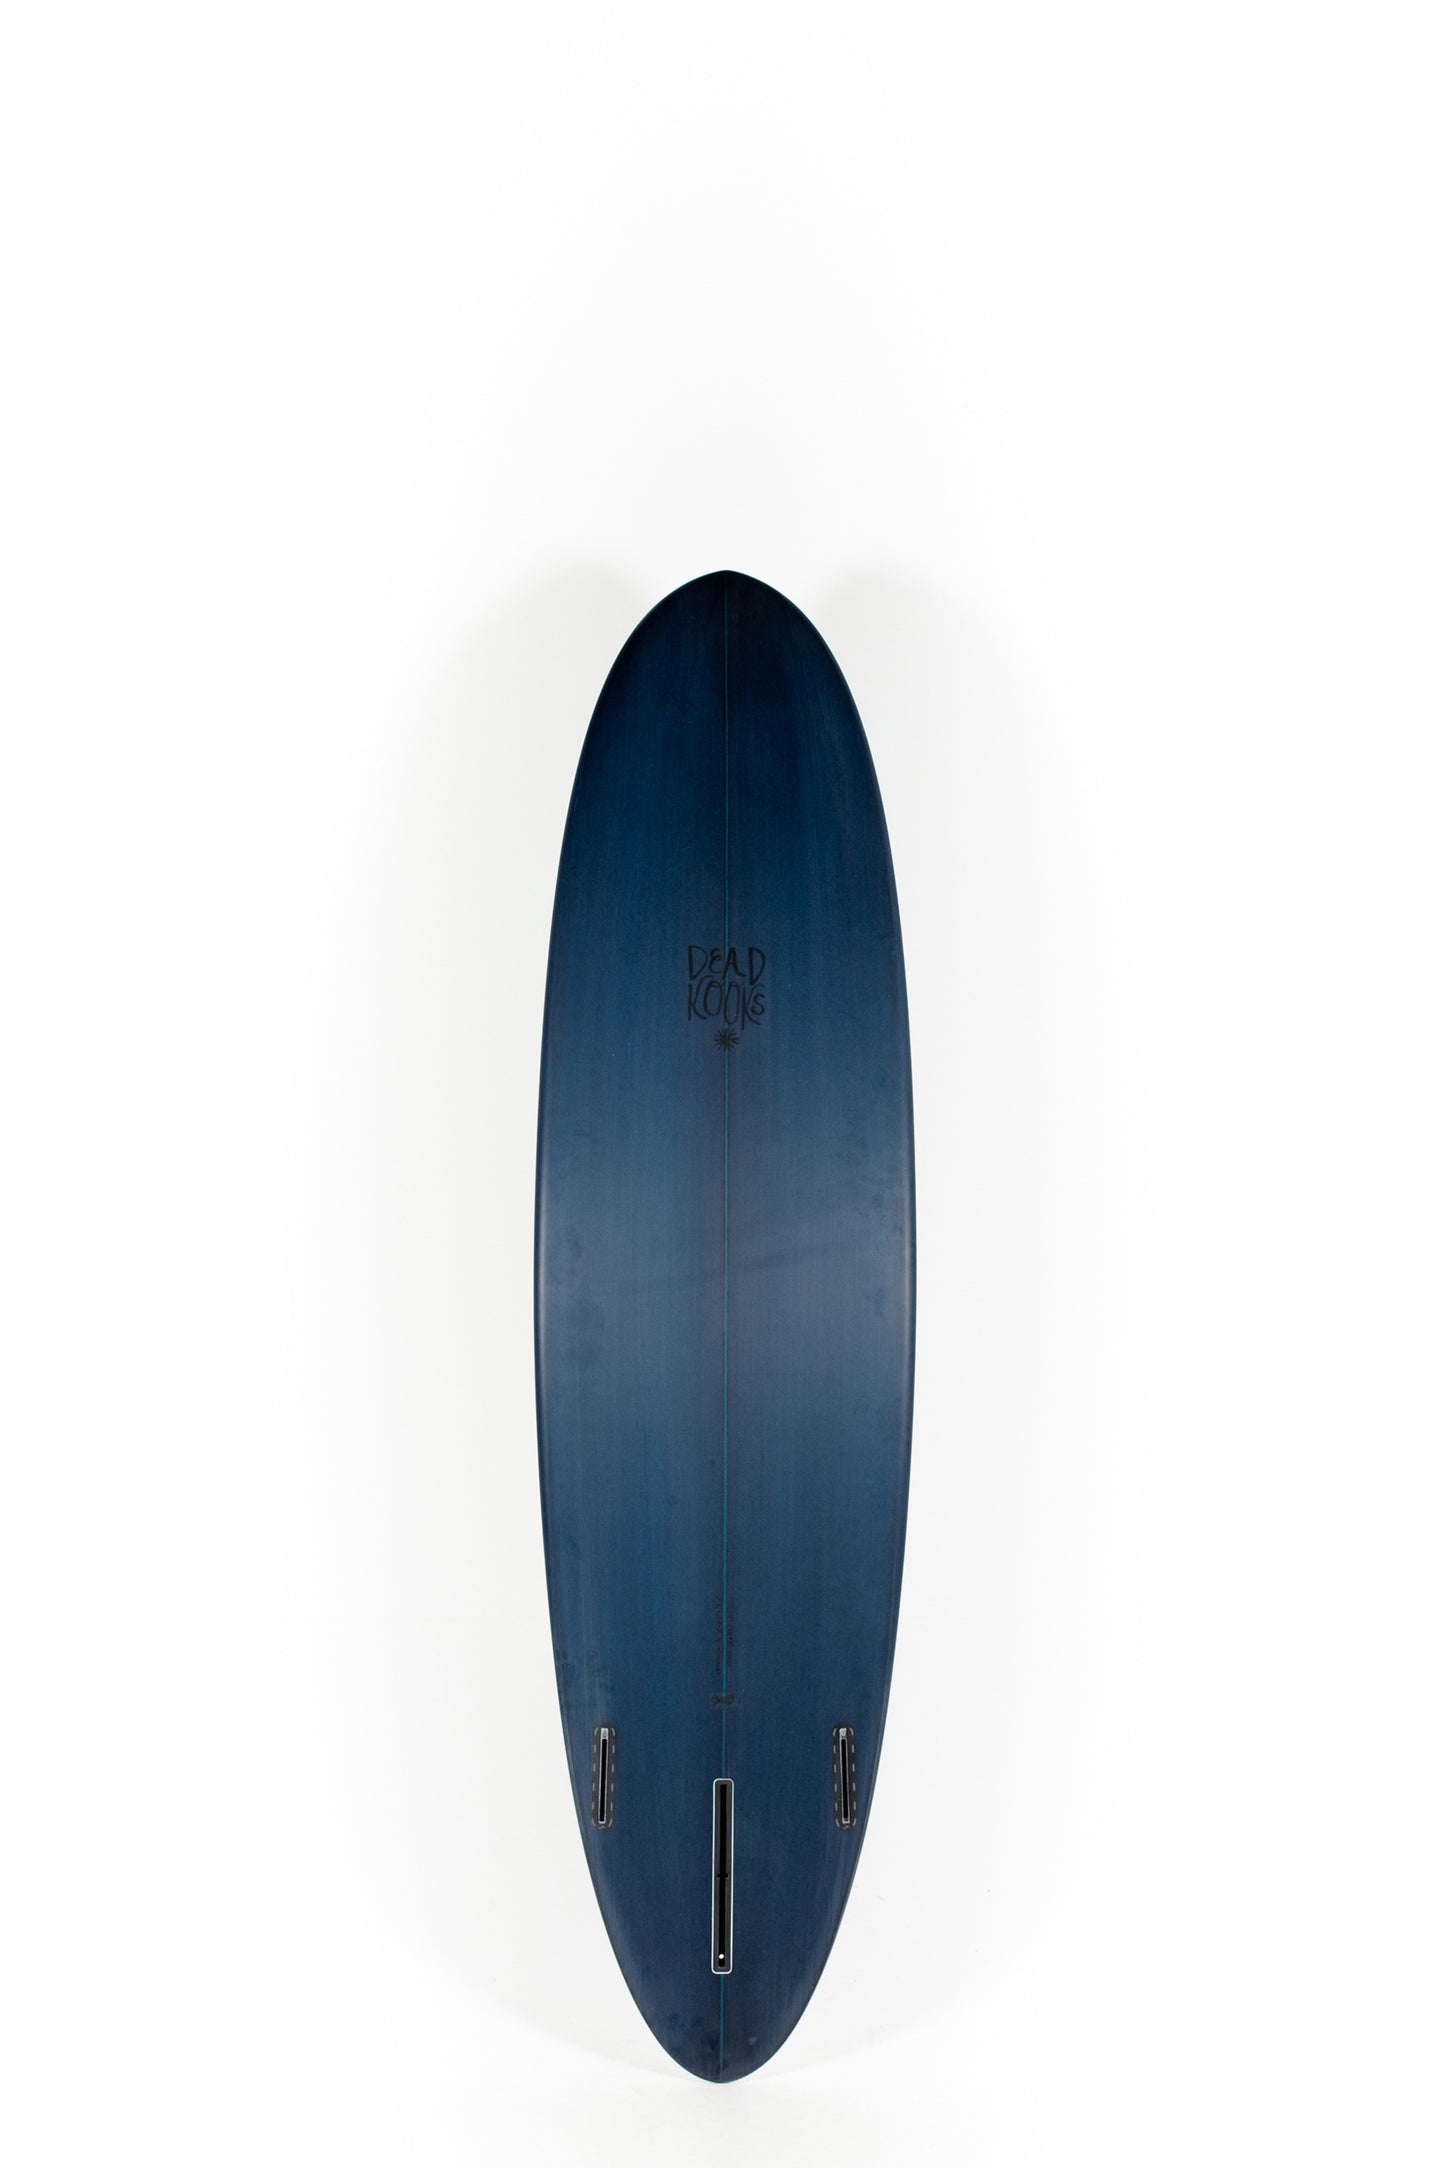 Pukas Surf Shop - Dead Kooks - SALTY - 6'10" - SALTY610